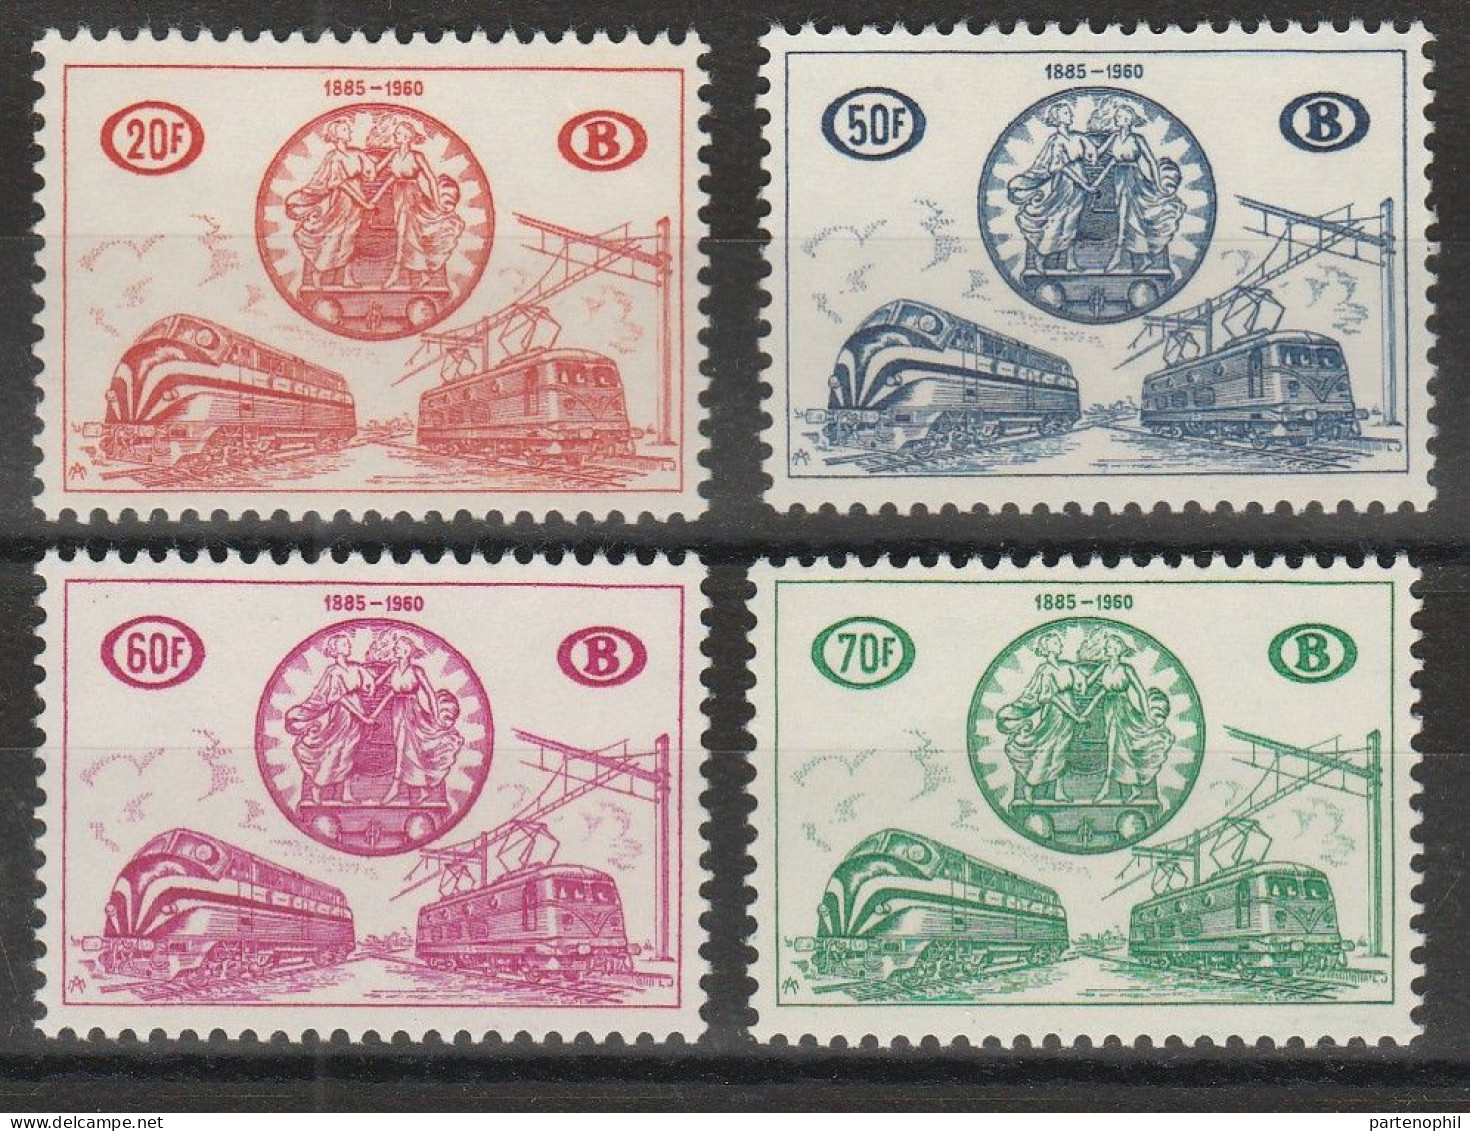 452 Belgio Belgium 1960 - Pacchi Postali - Locomotive, N. 369/72. Cat. € 200,00.  MNH - Postfris